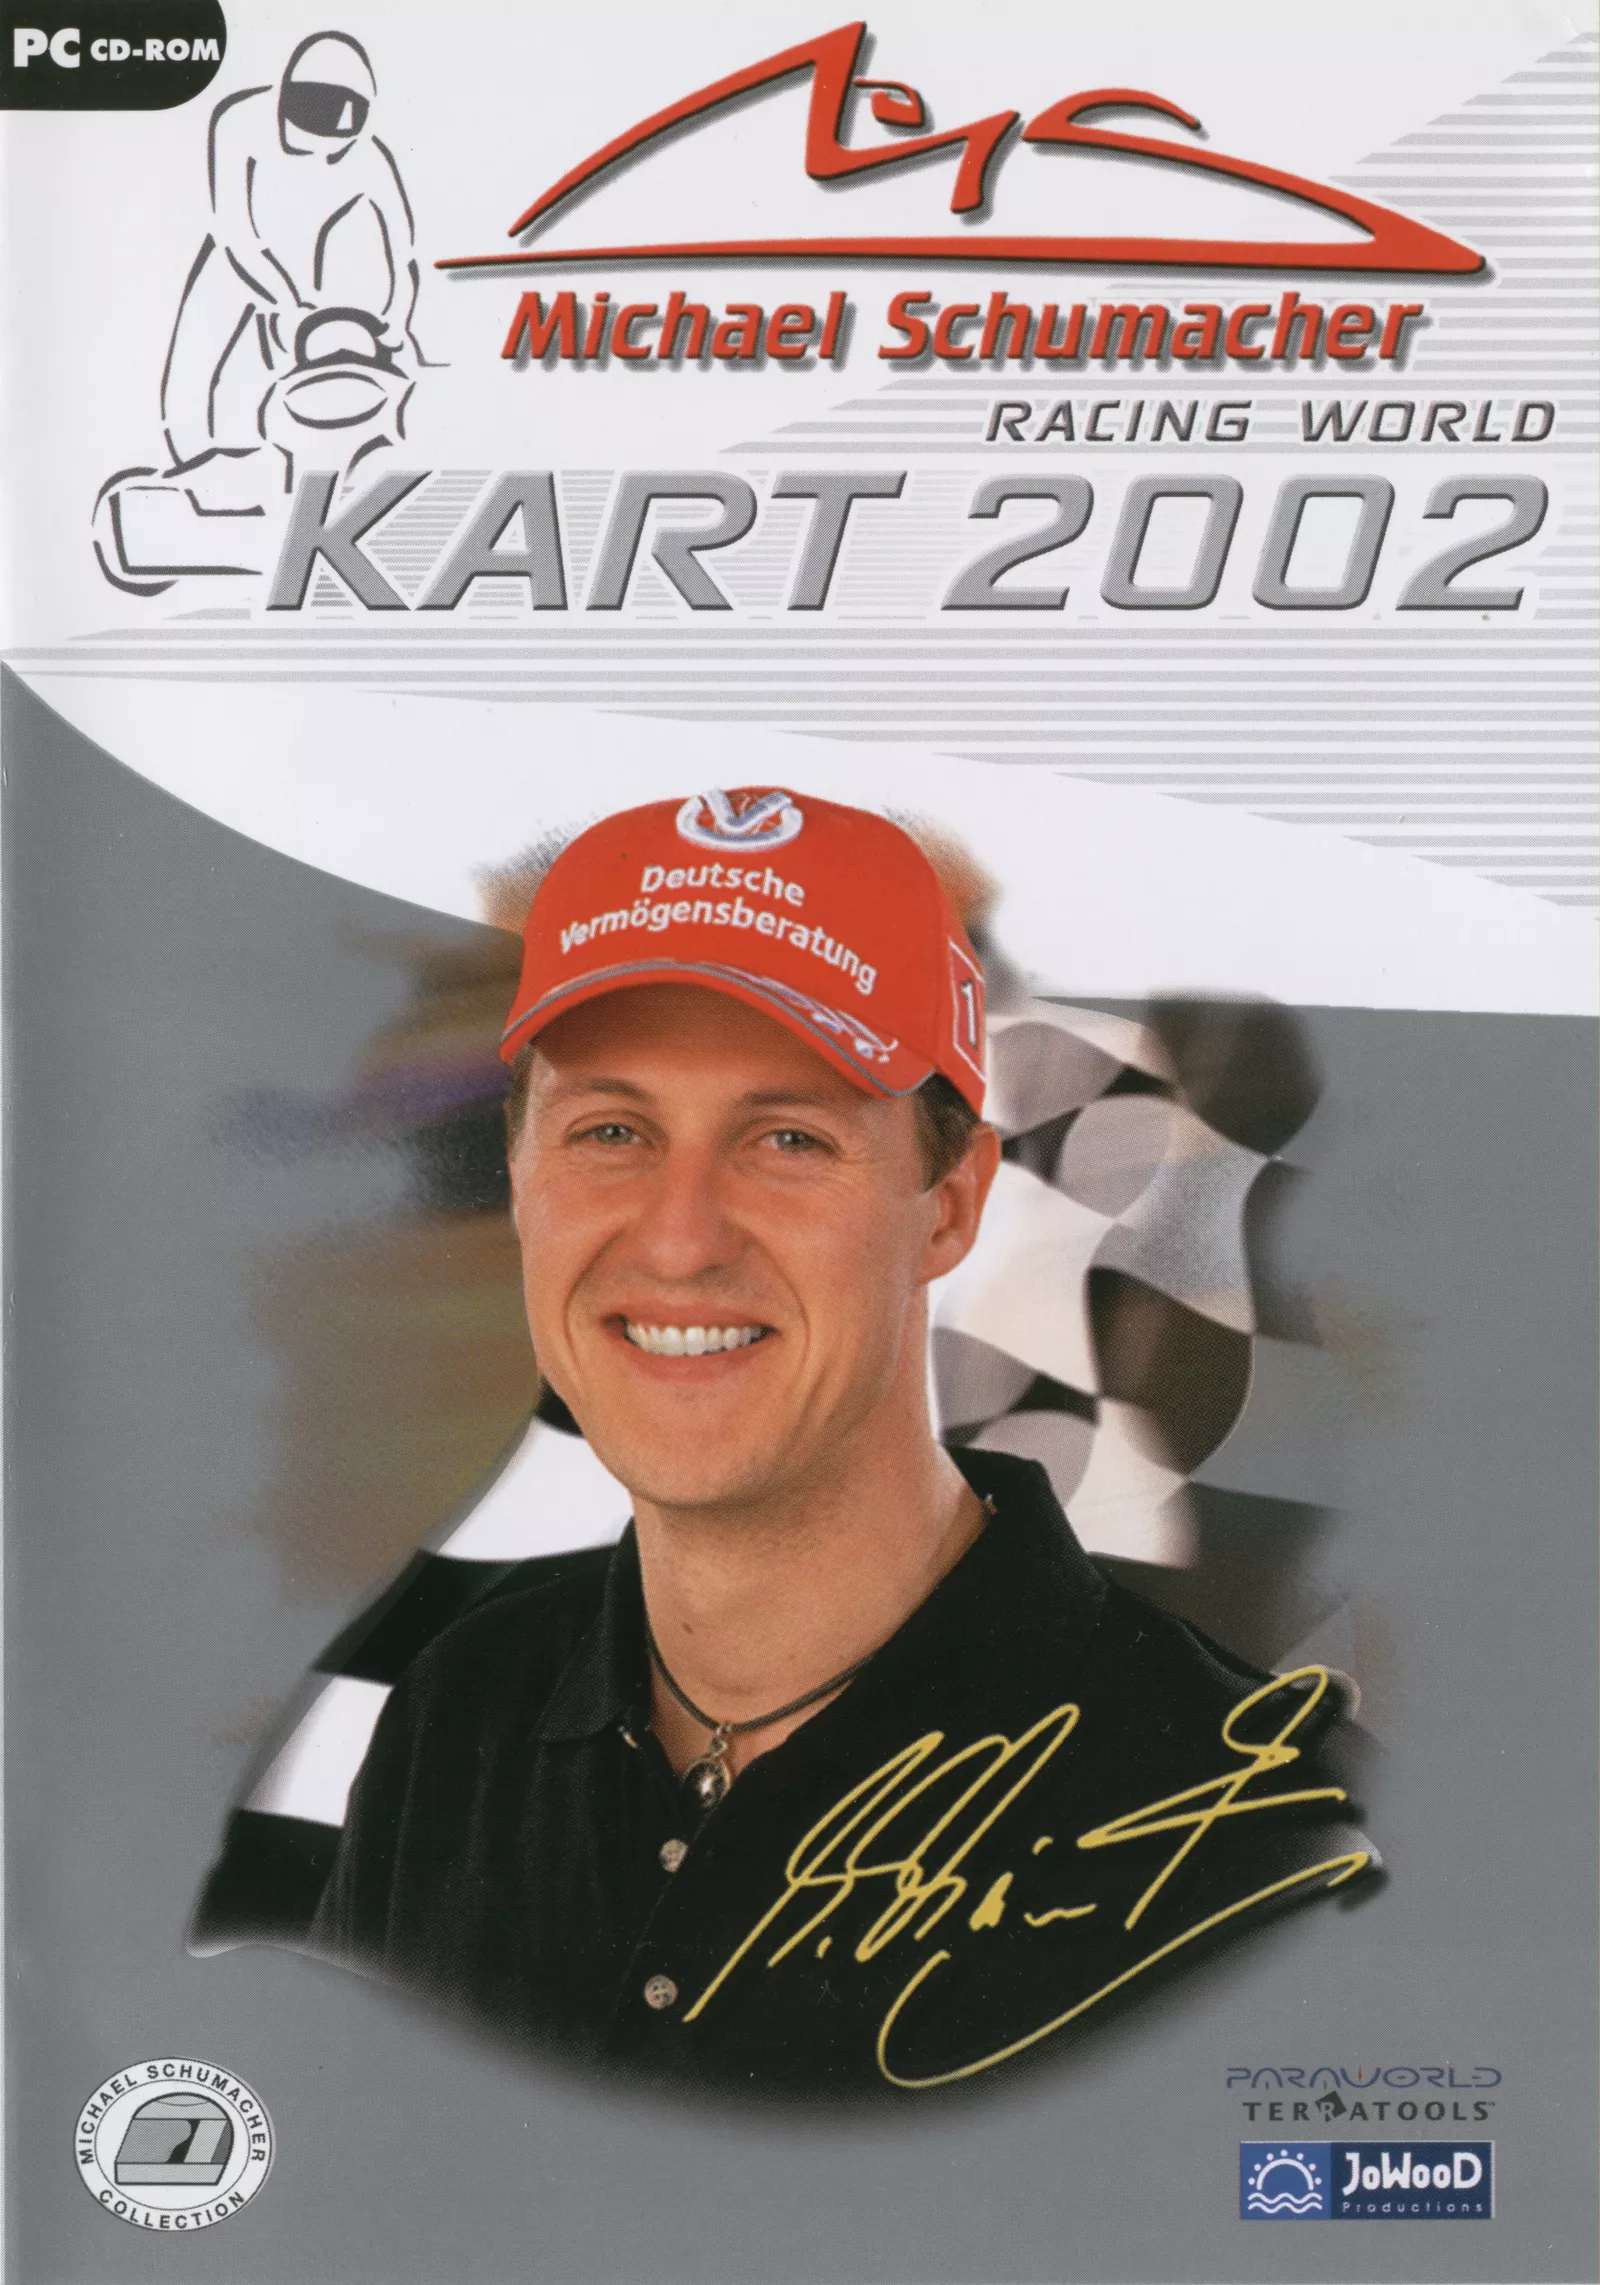 Michael Schumacher Racing World Kart 2002 / Мировые гонки. Михаэль Шумахер